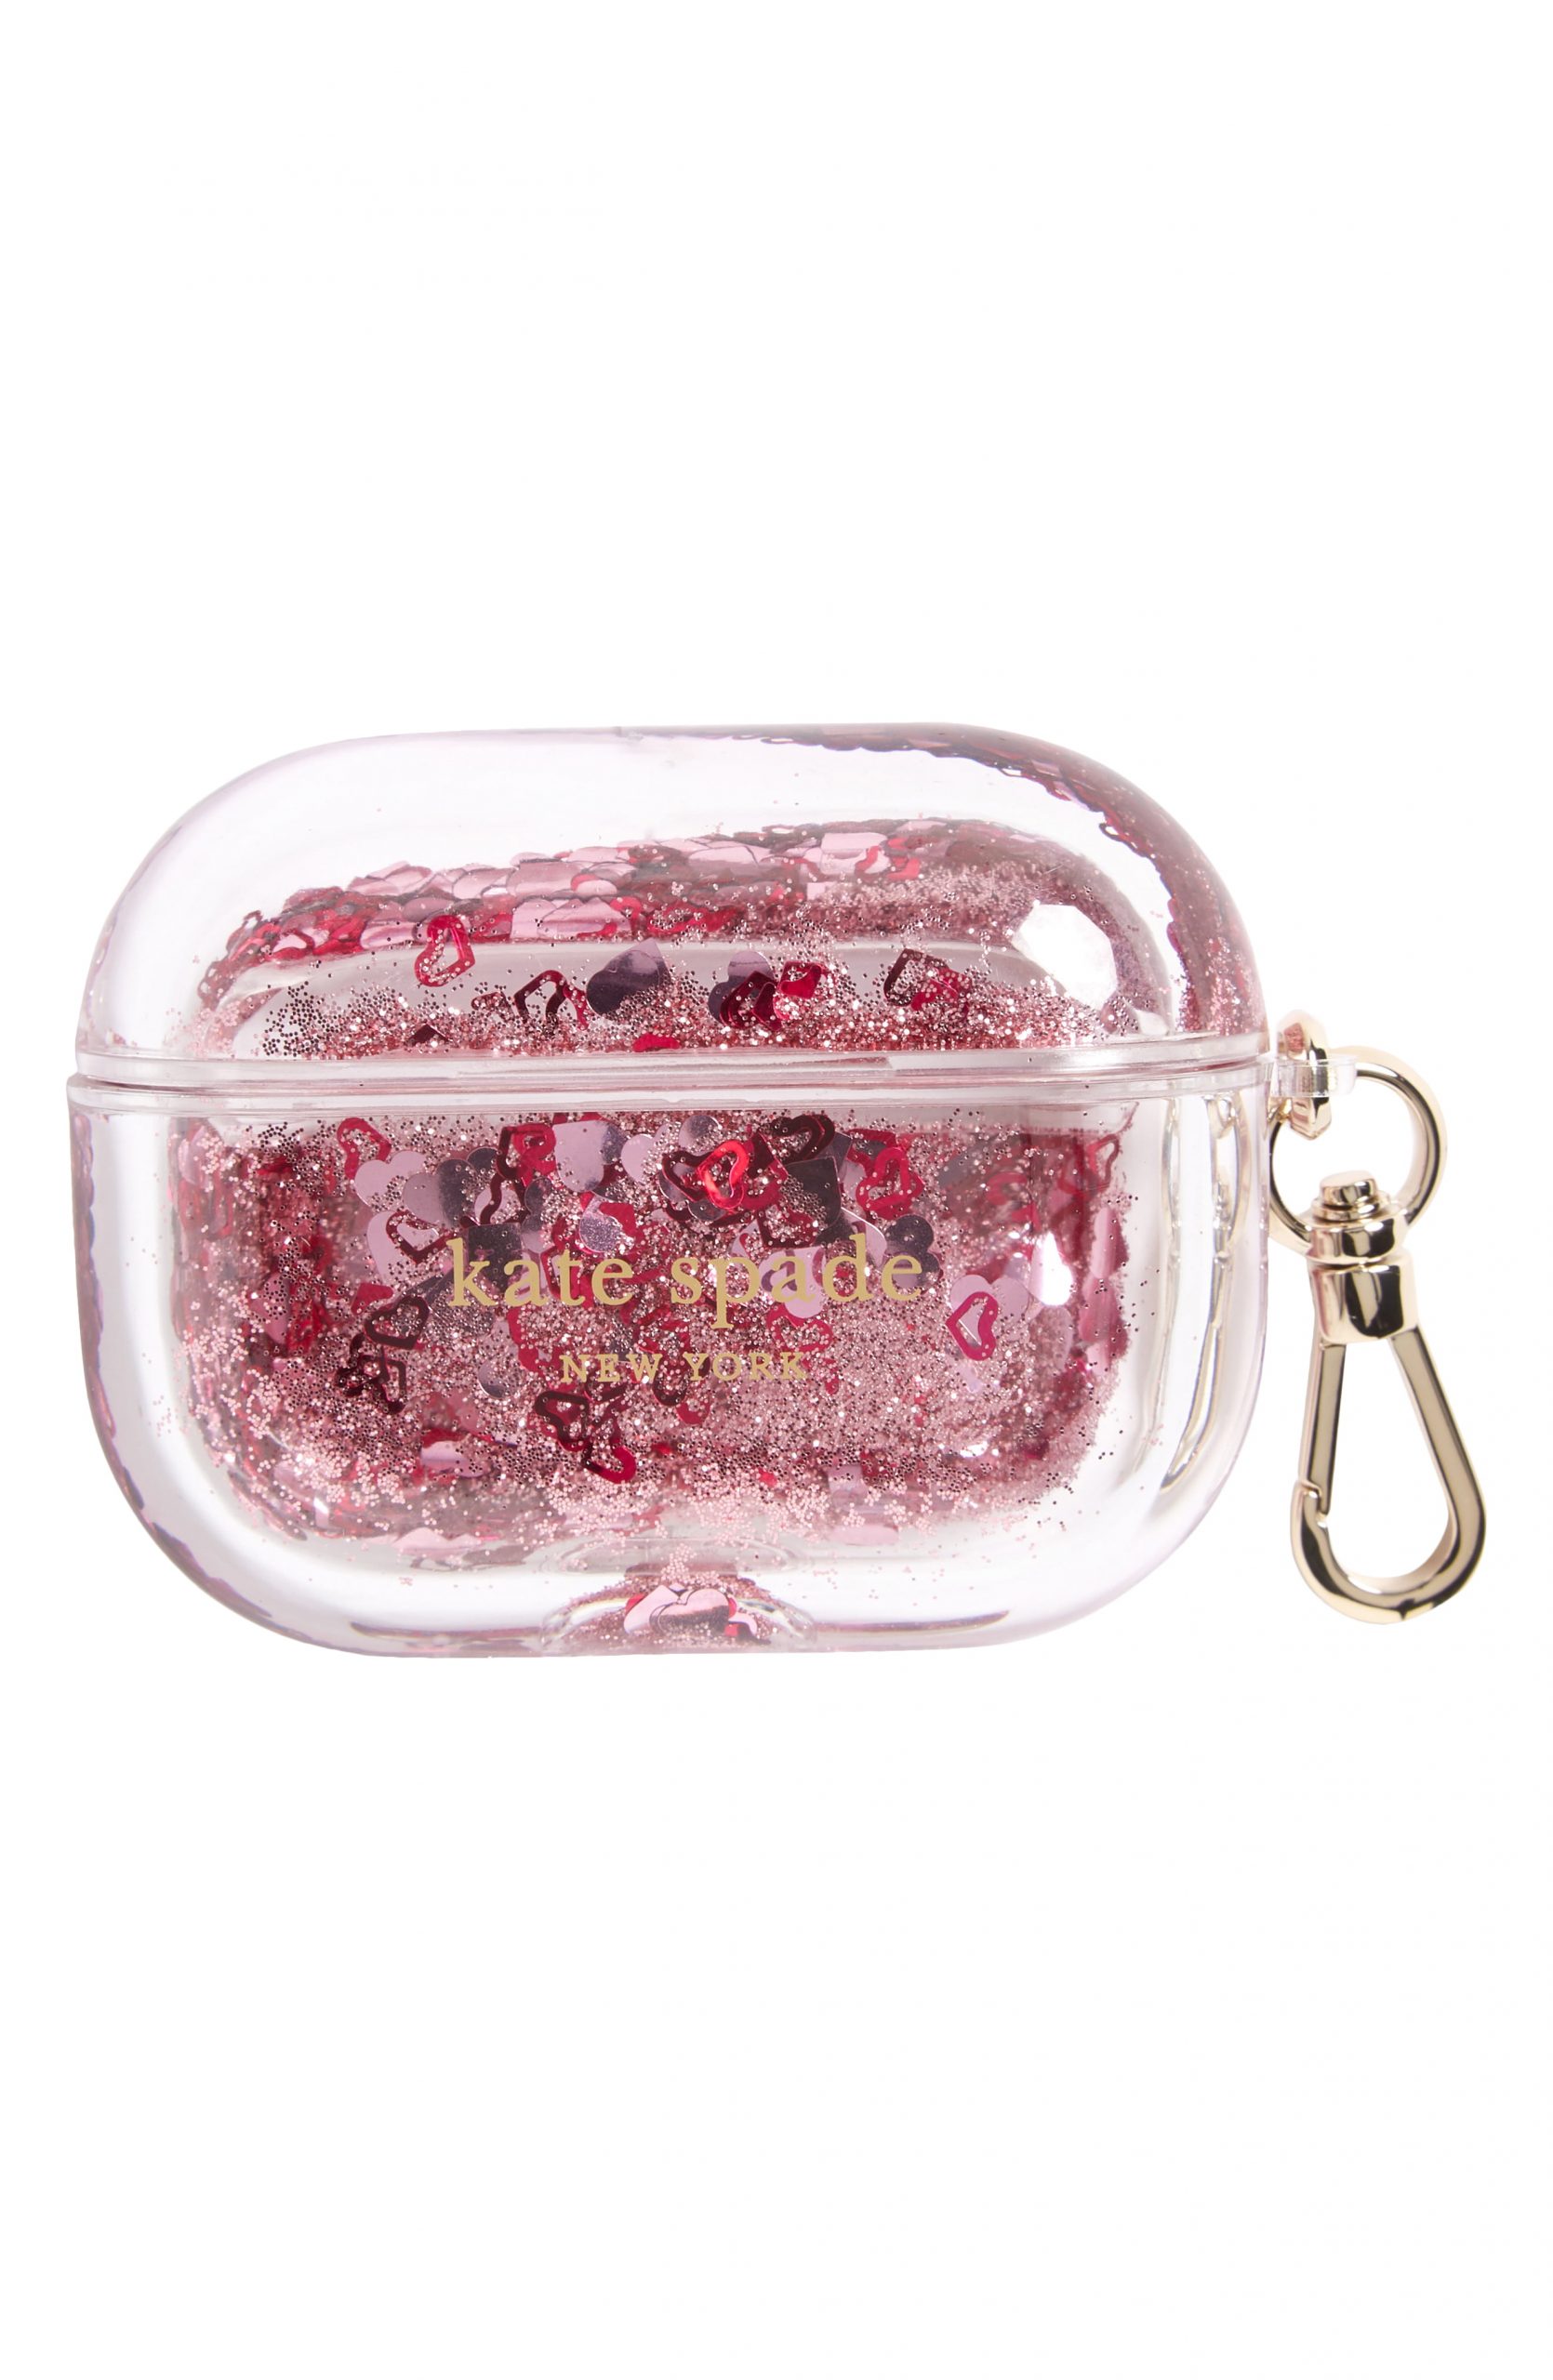 Kate Spade New York Glitter Airpod Pro Case - Pink | Fashion Gone Rogue